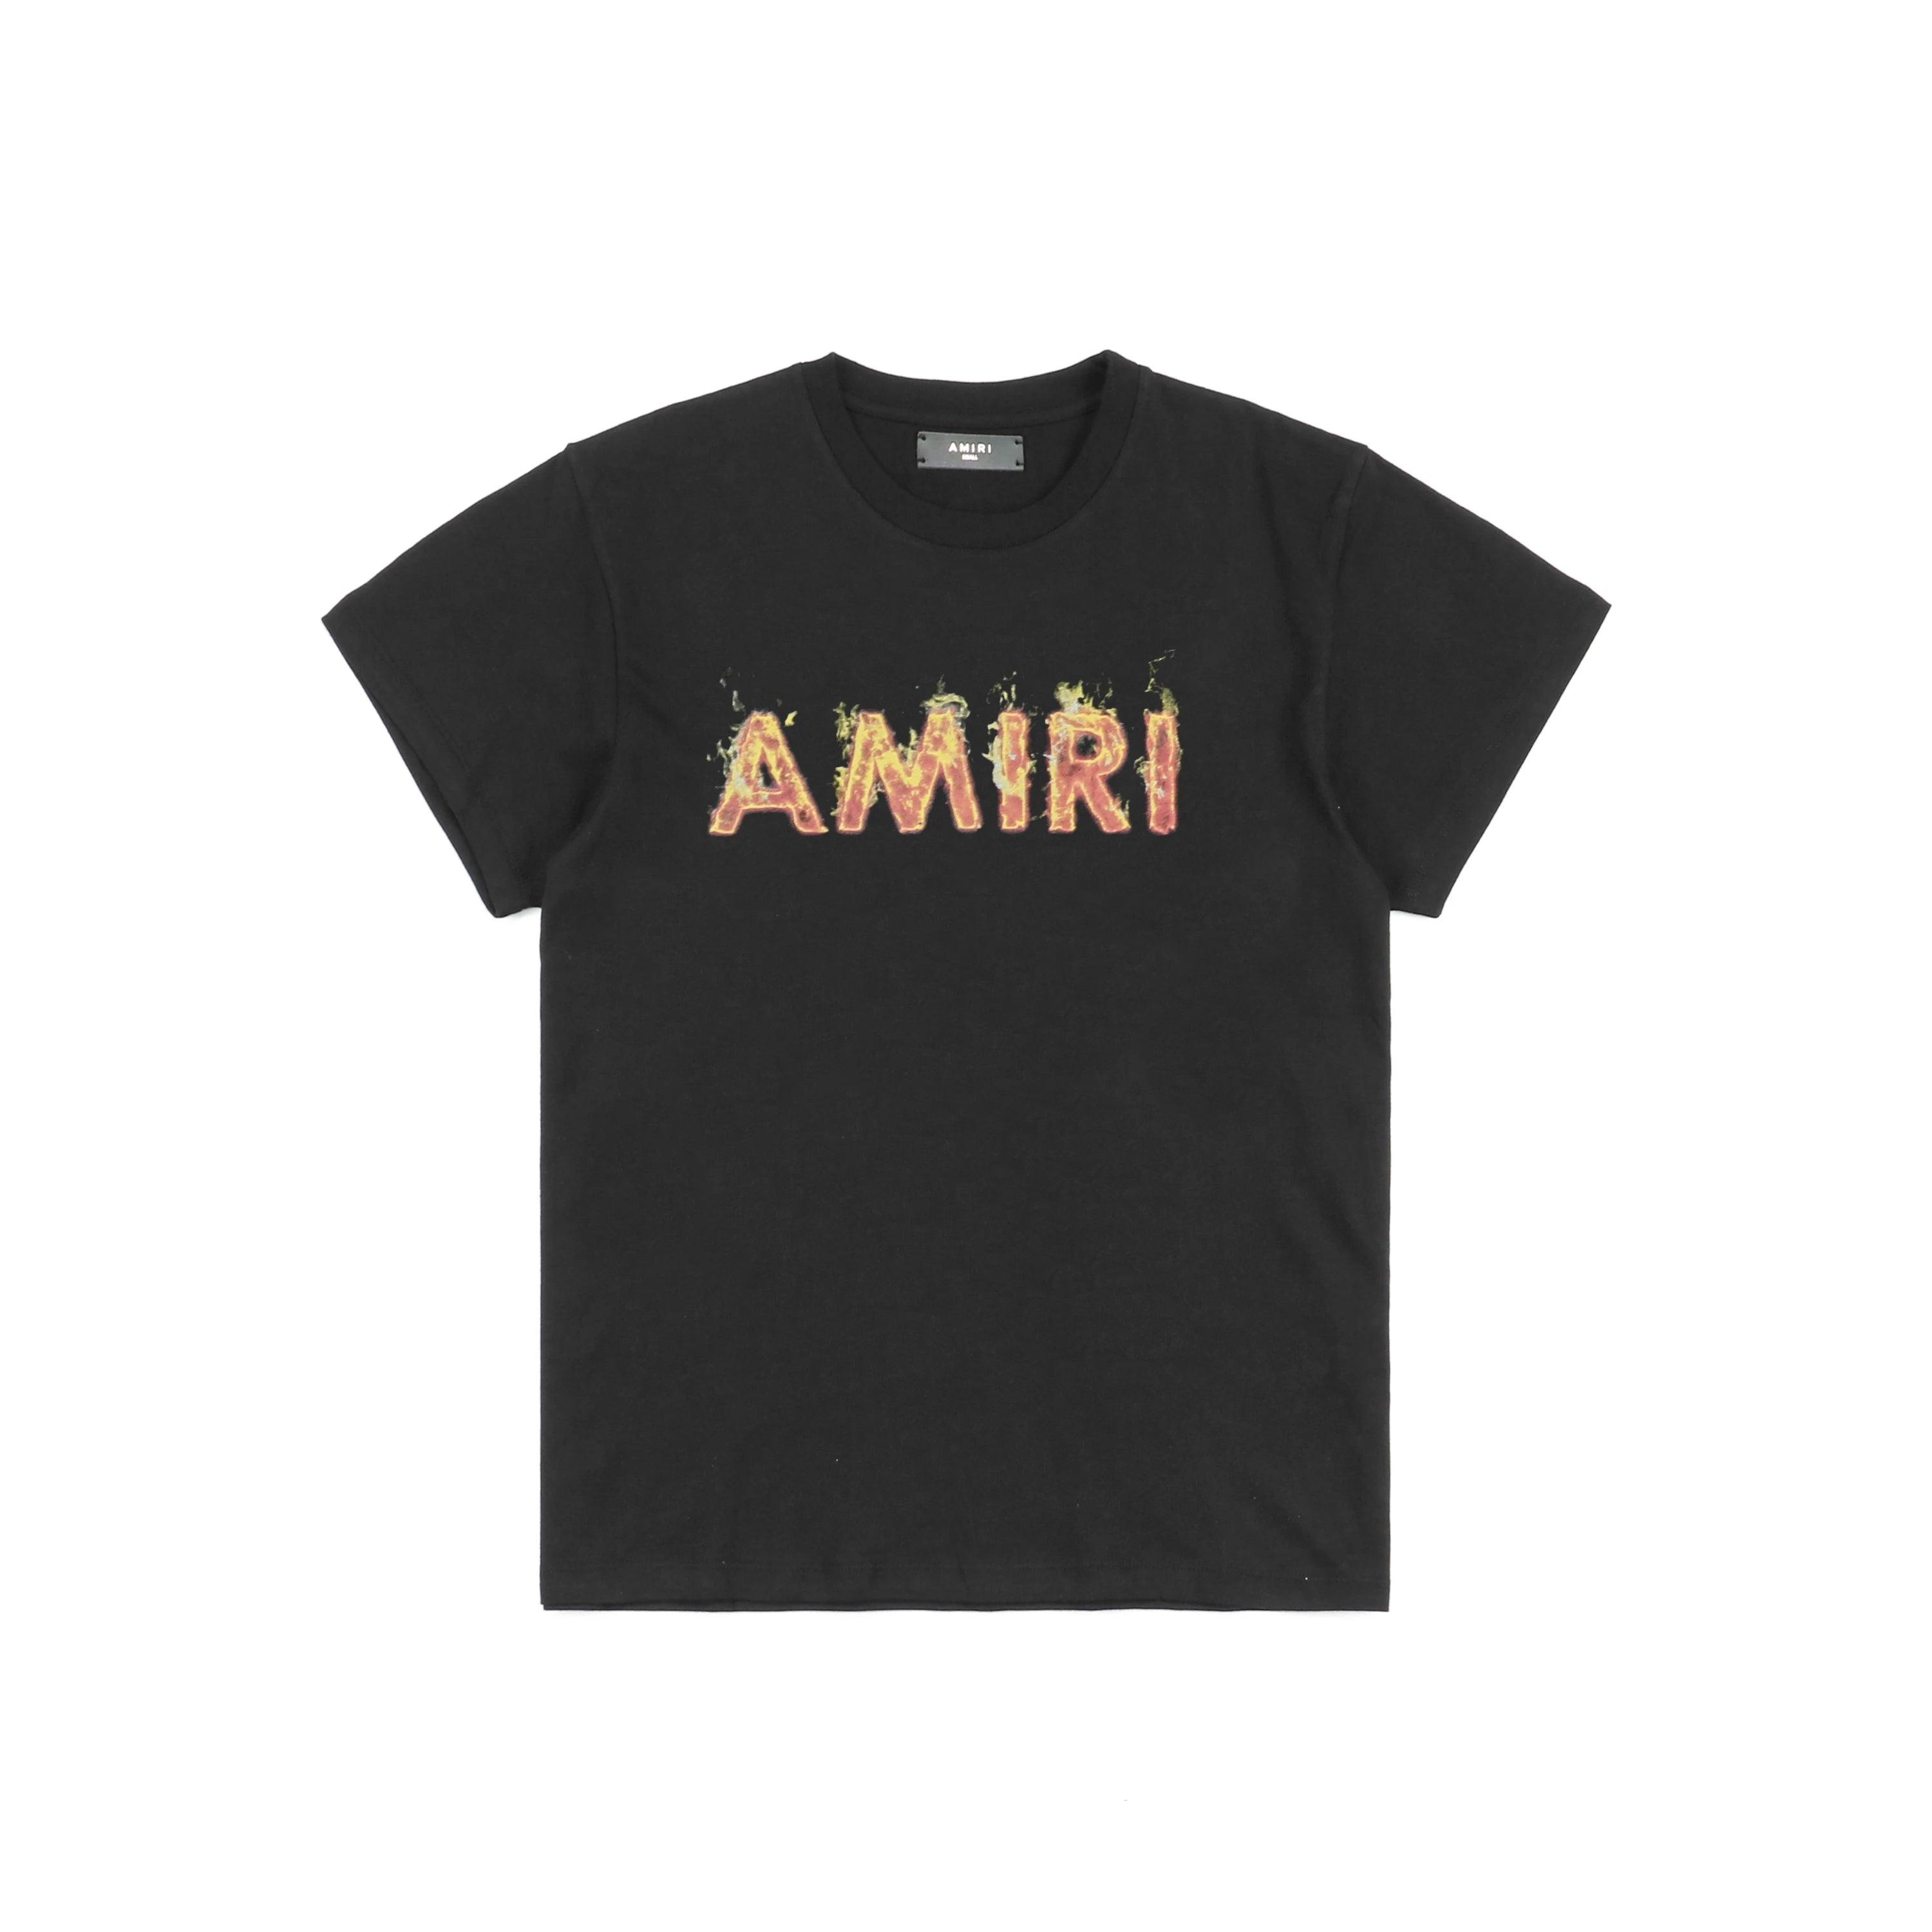 AMIRI FIRE